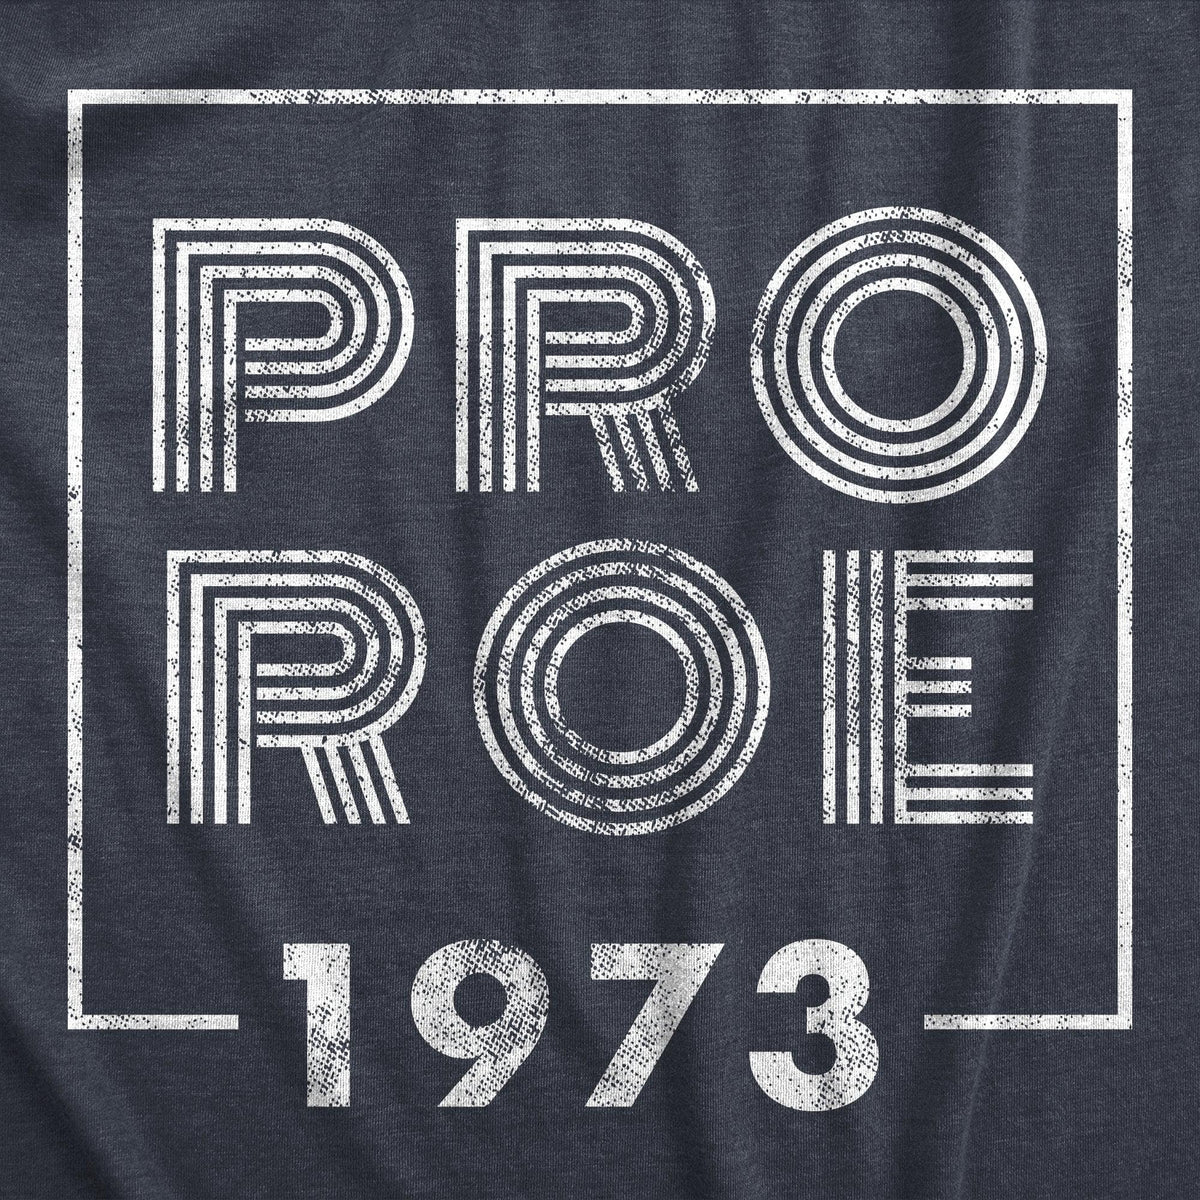 Pro Roe 1973 Women&#39;s Tshirt  -  Crazy Dog T-Shirts